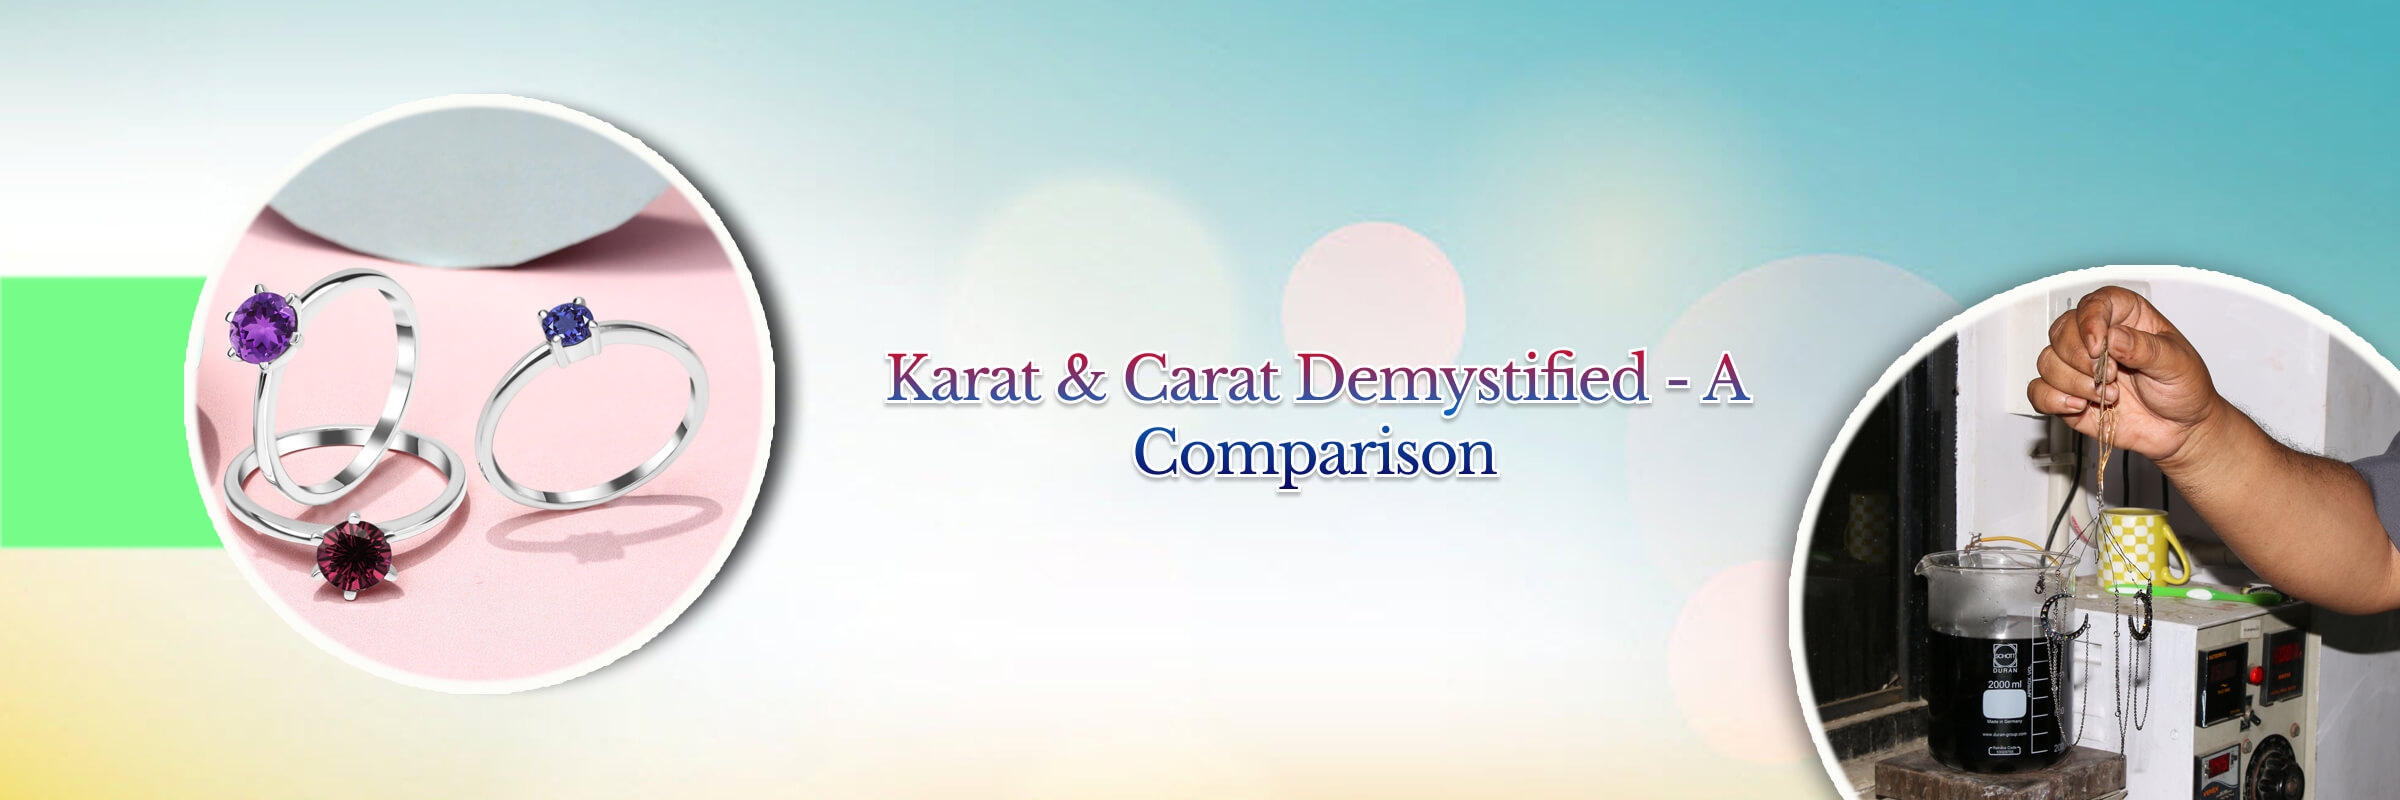 Difference Between Karat And Carat?